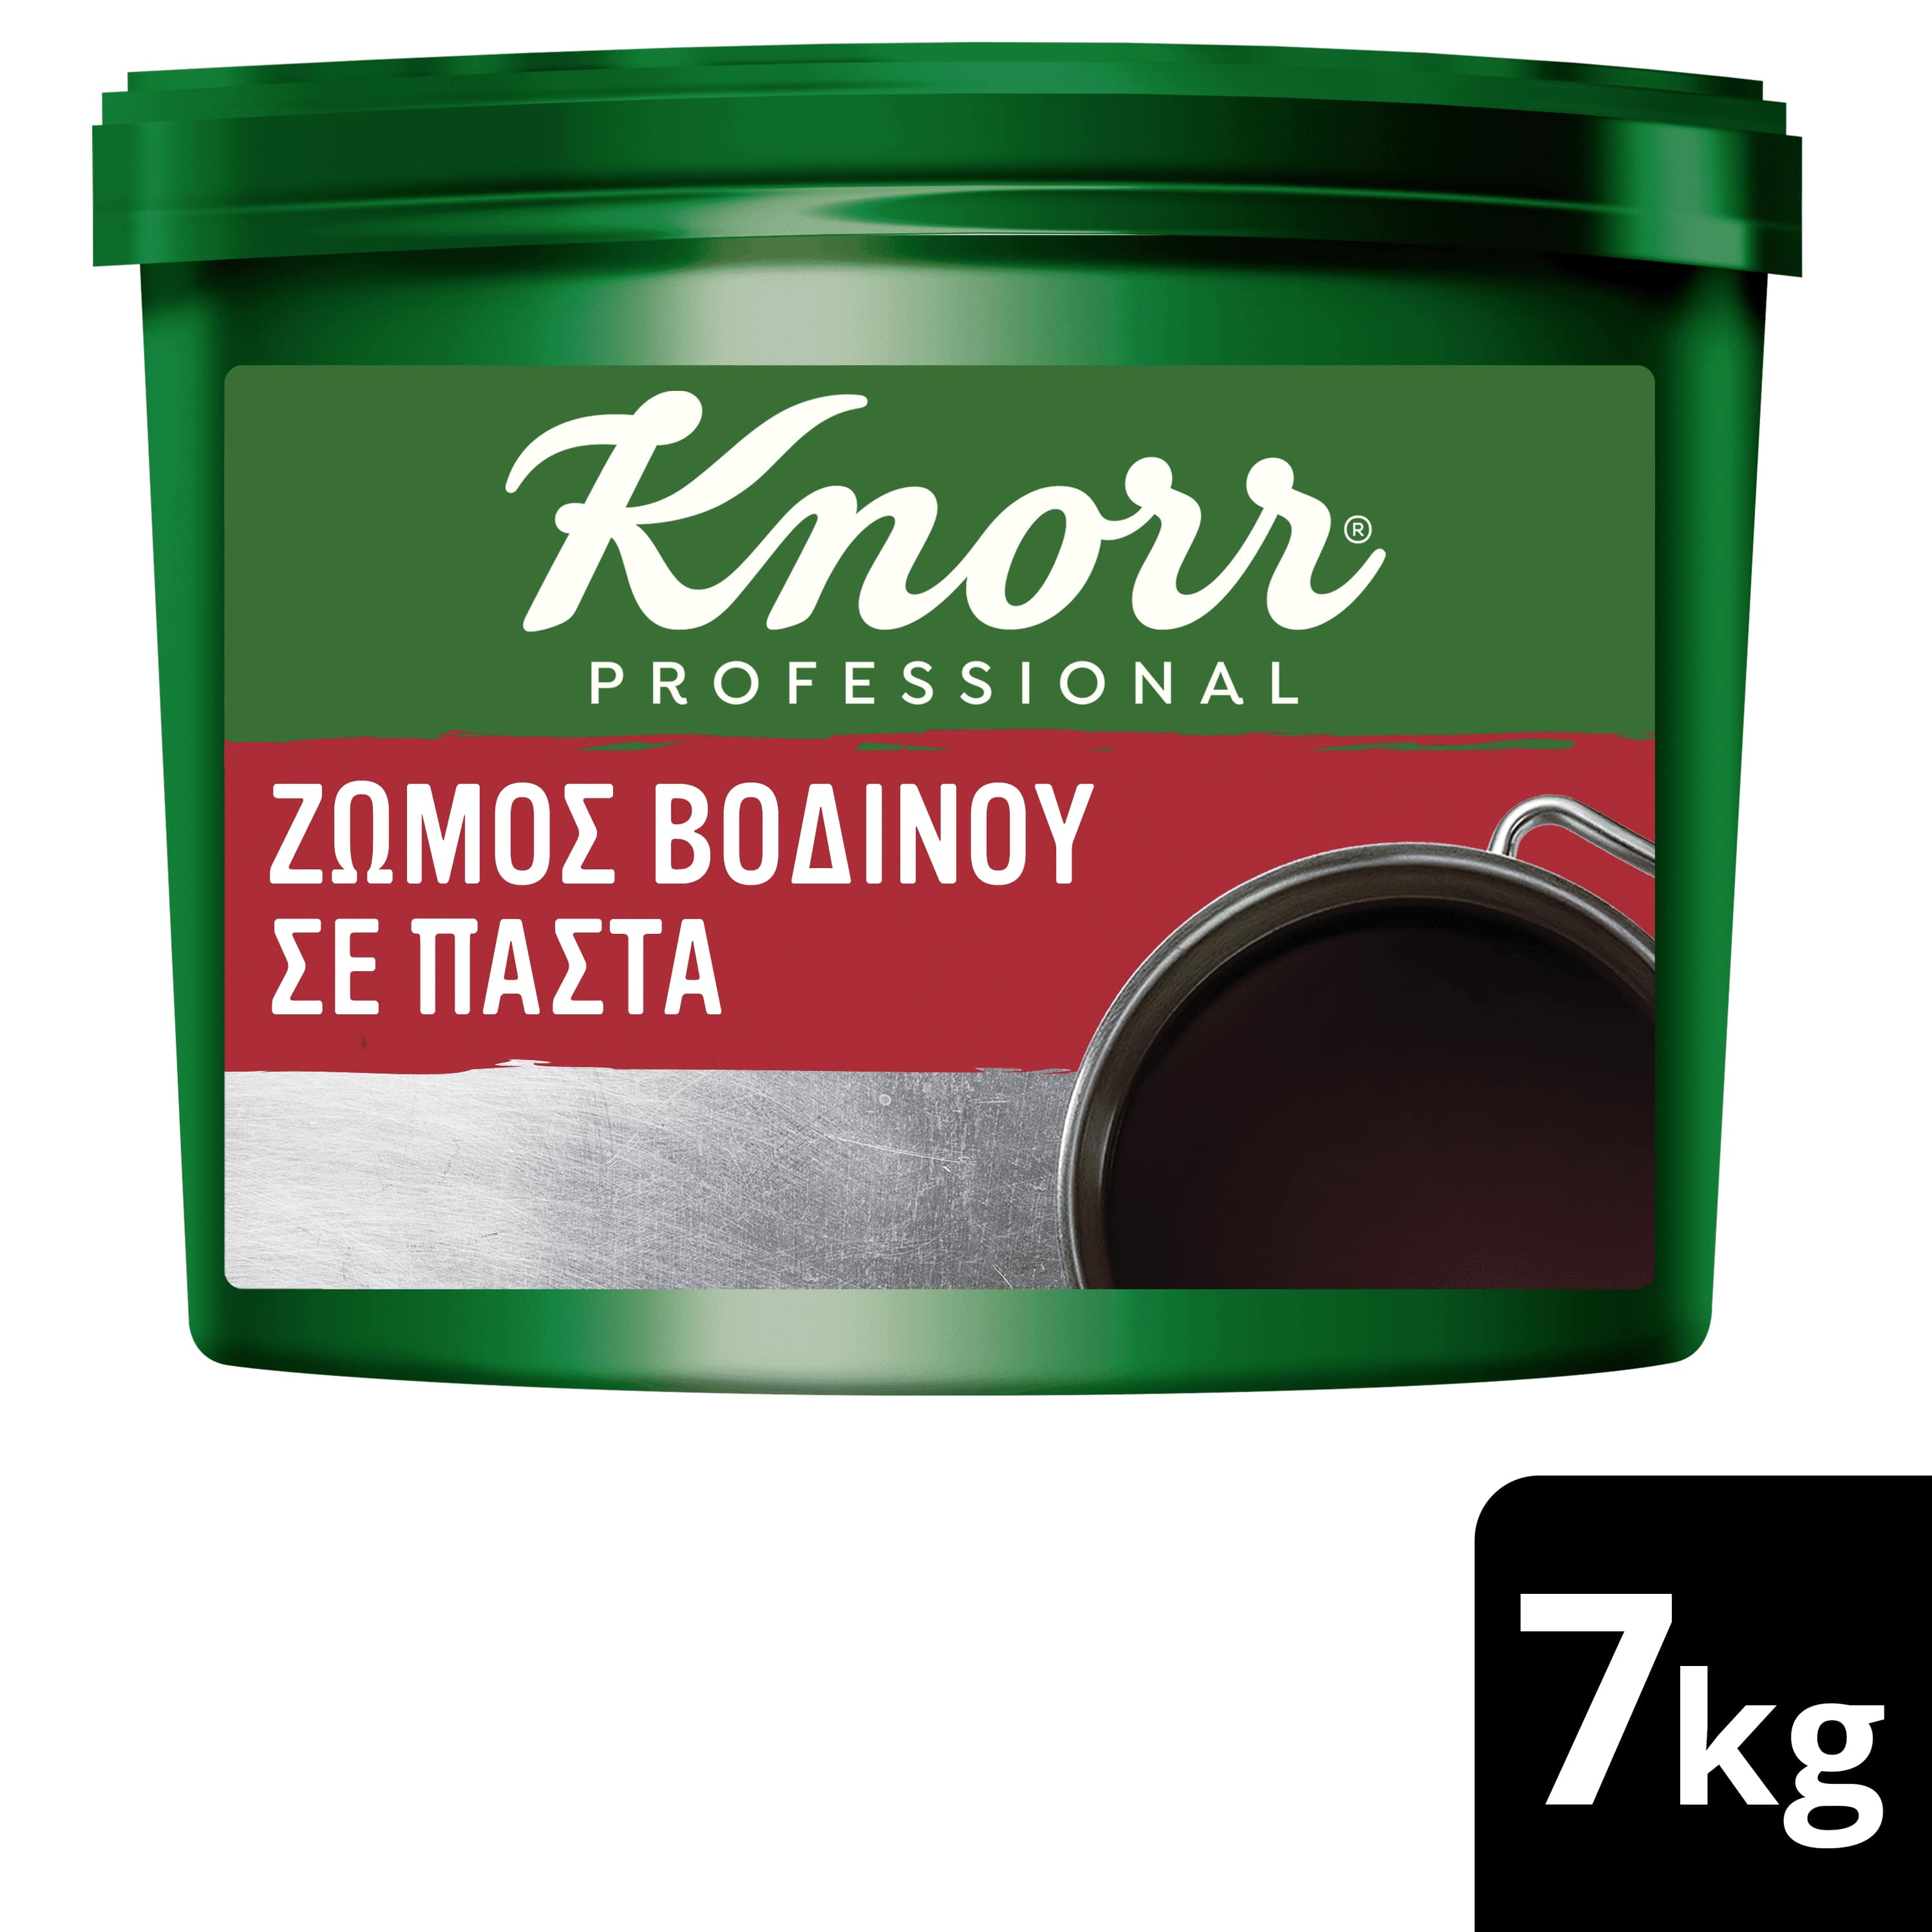 Knorr Ζωμός Βοδινού σε Πάστα 7 kg - 